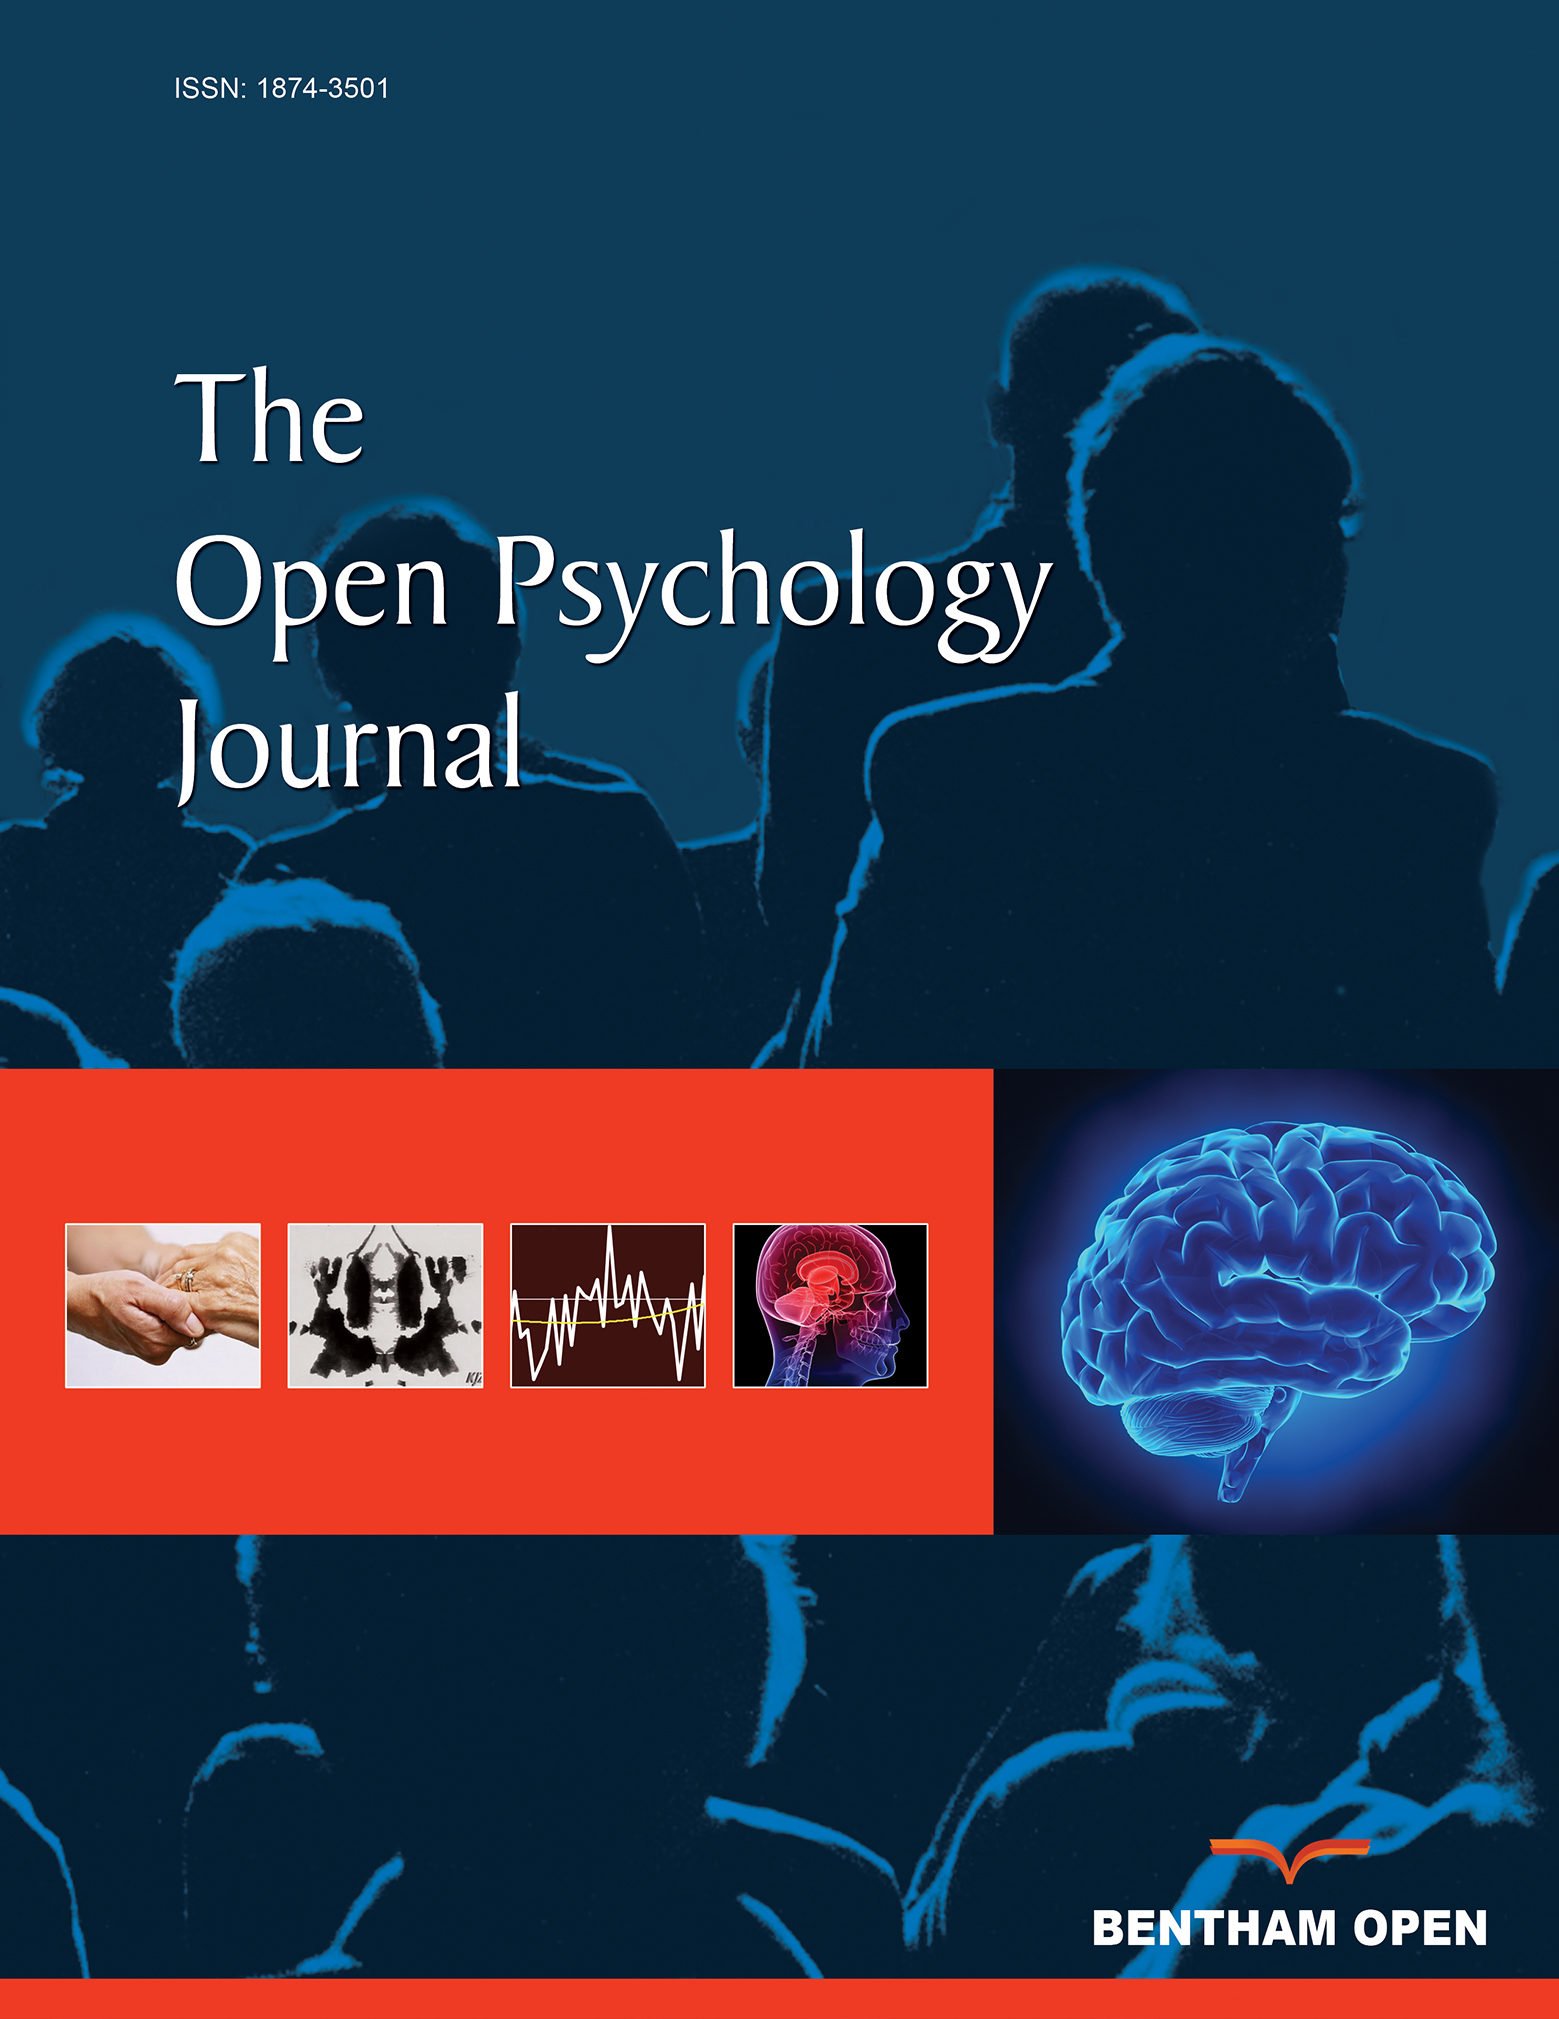 The Open Psychology Journal